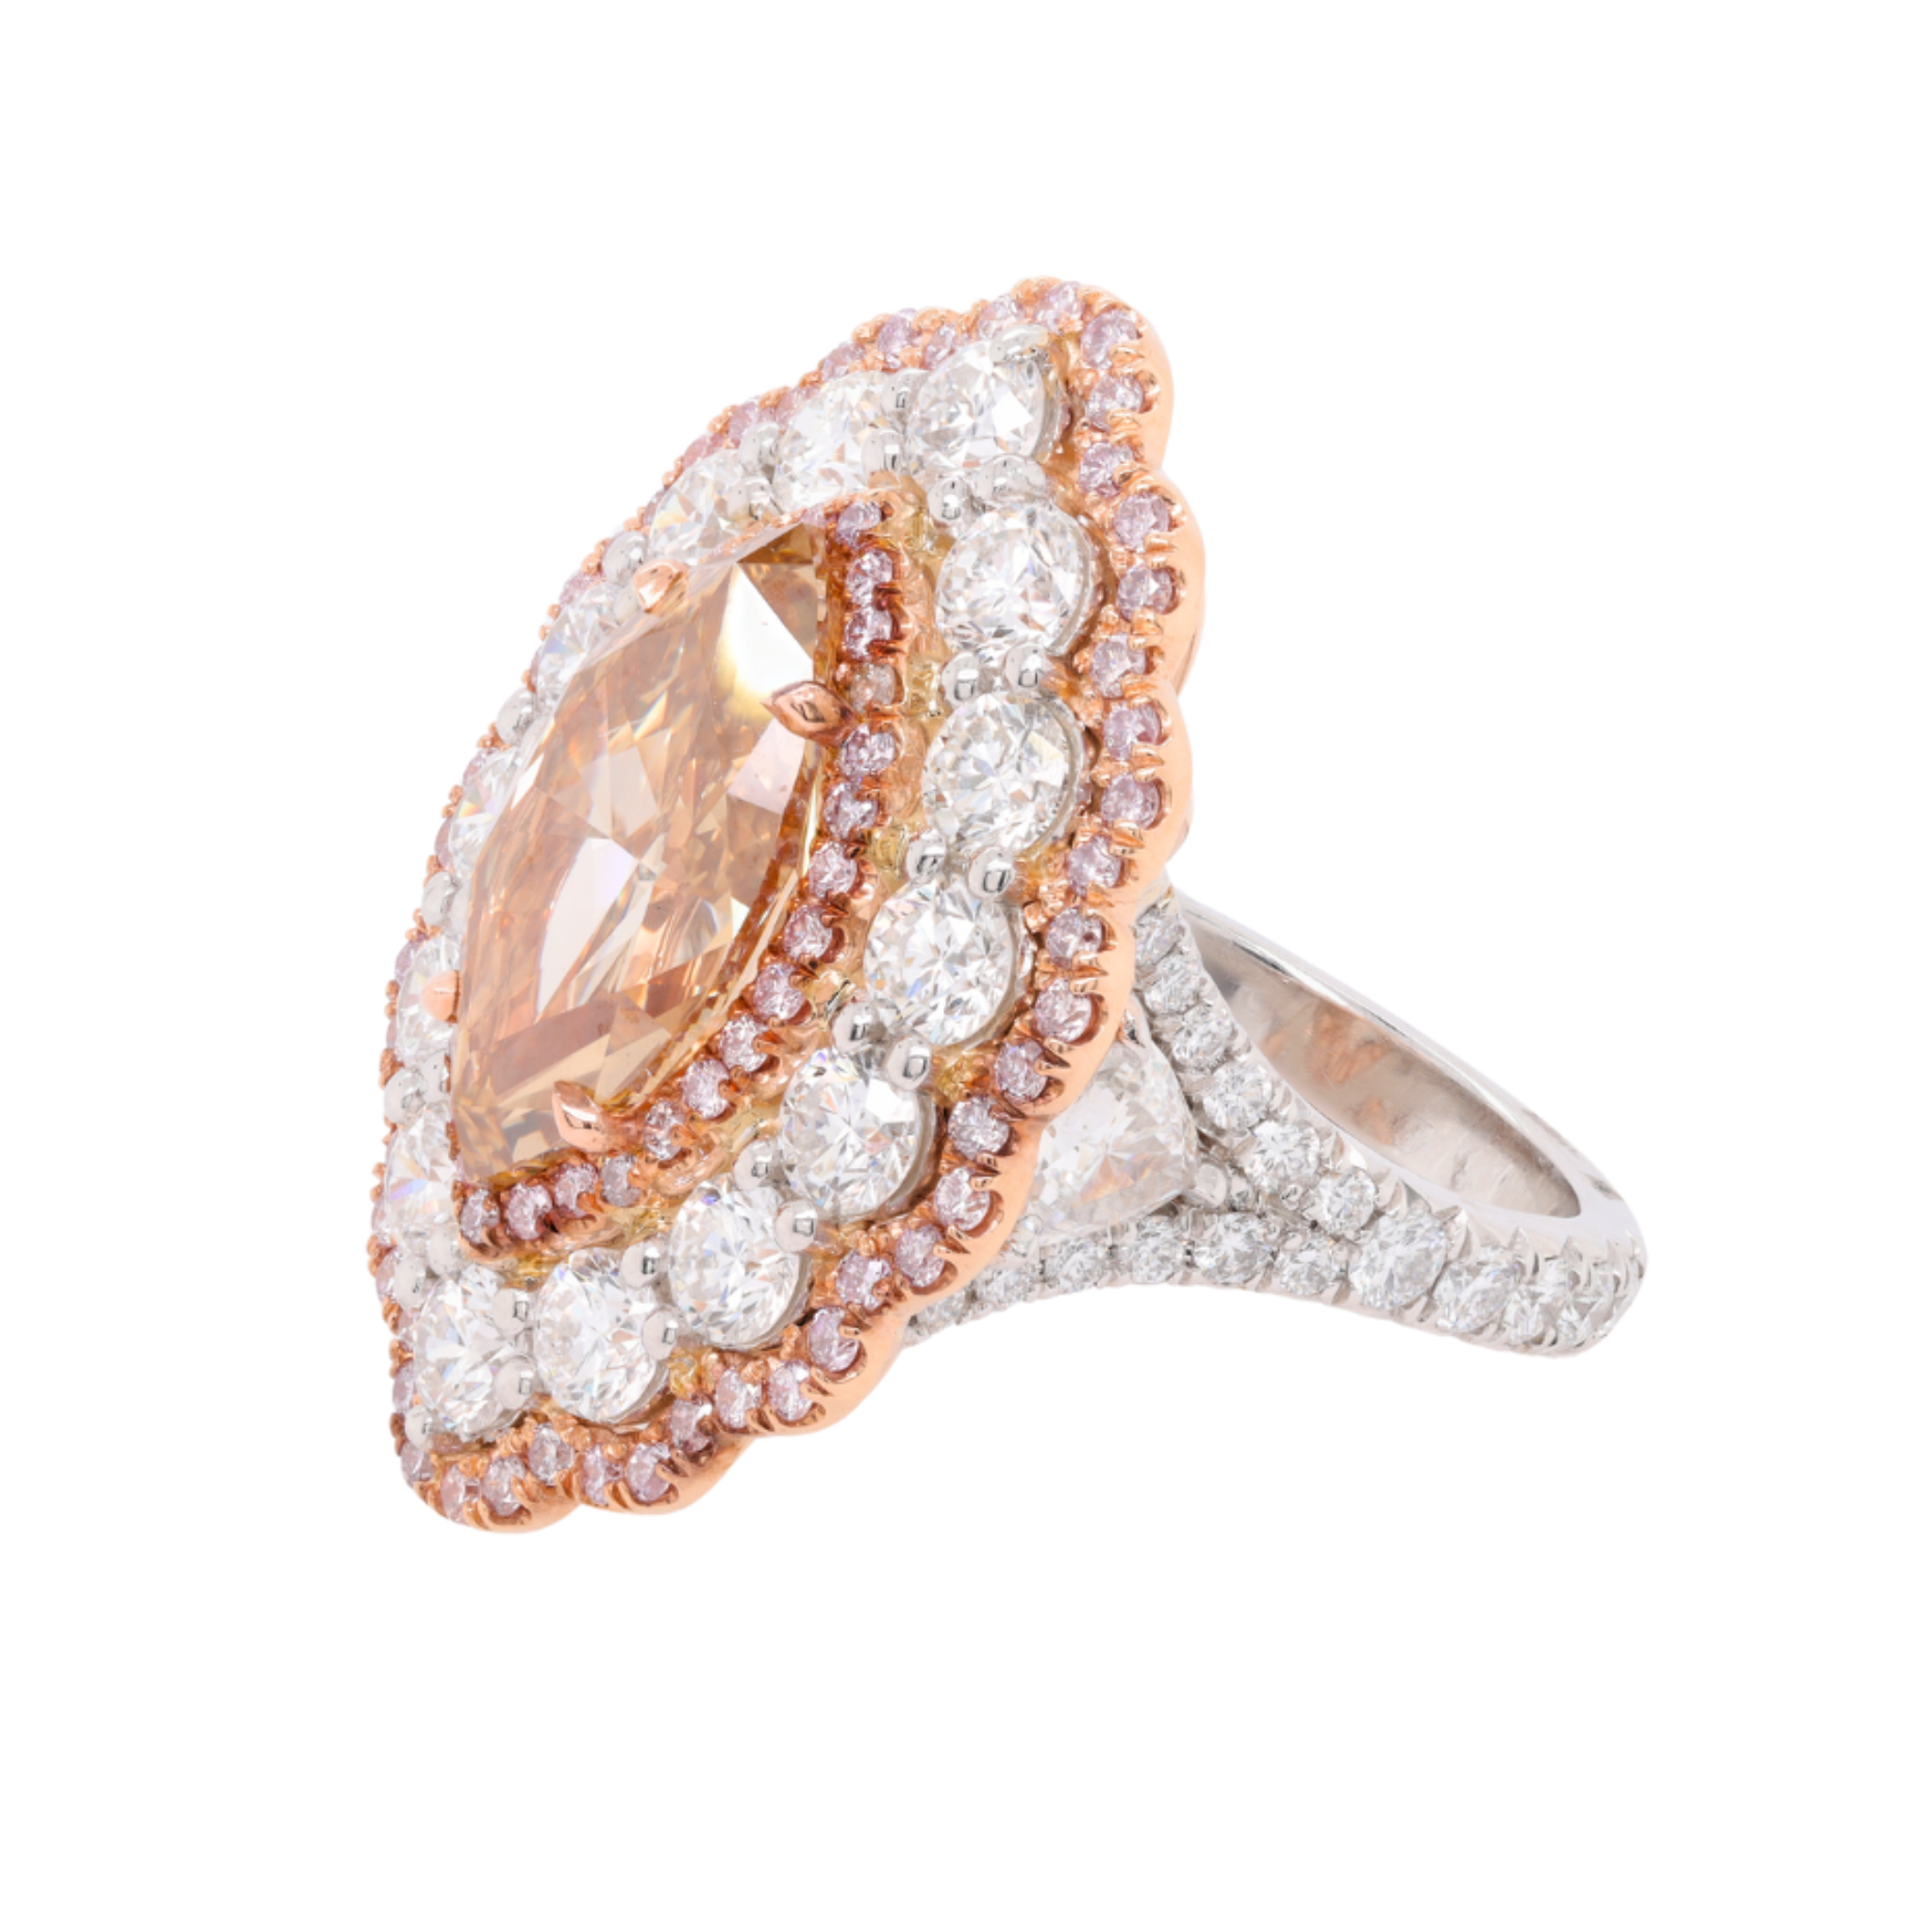 2 carat diamond ring natural